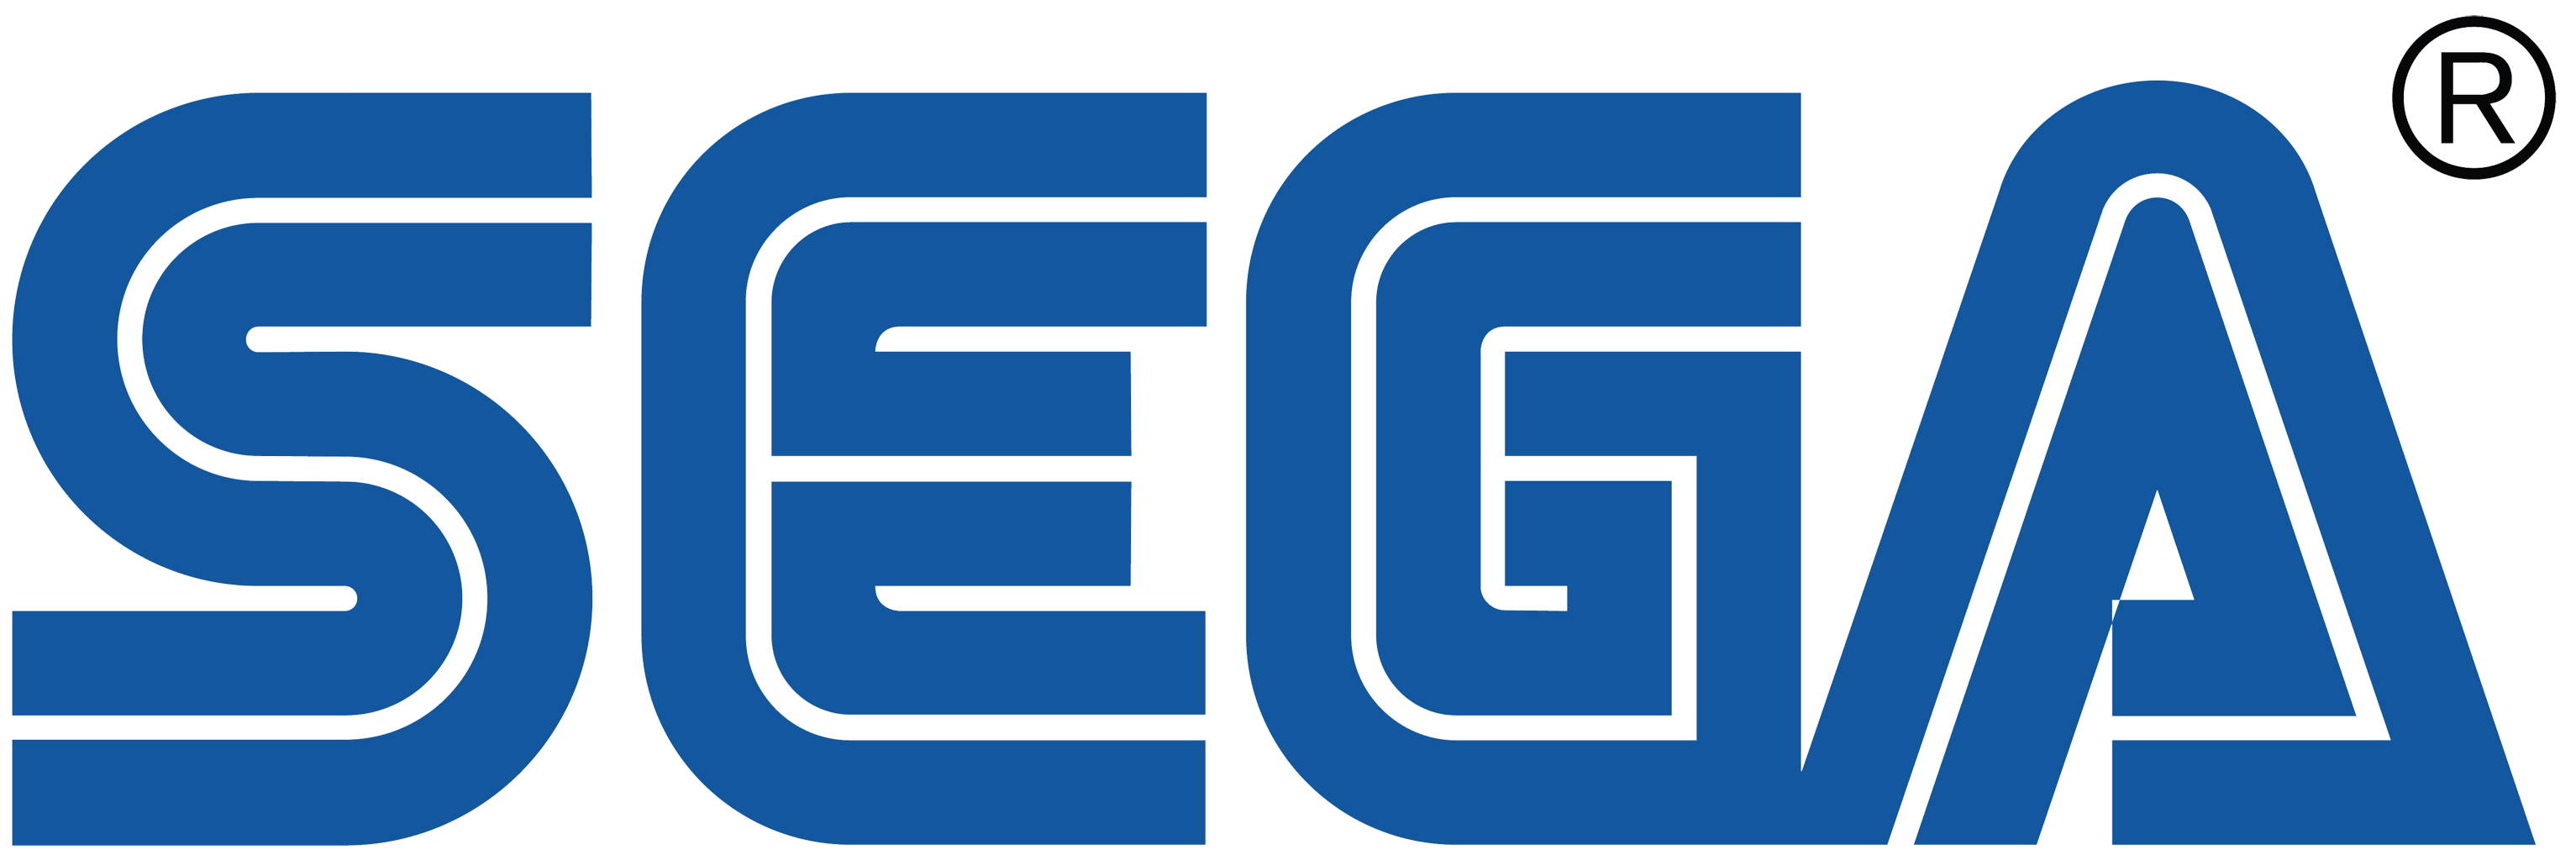 Sega Logo - SEGA logo.png